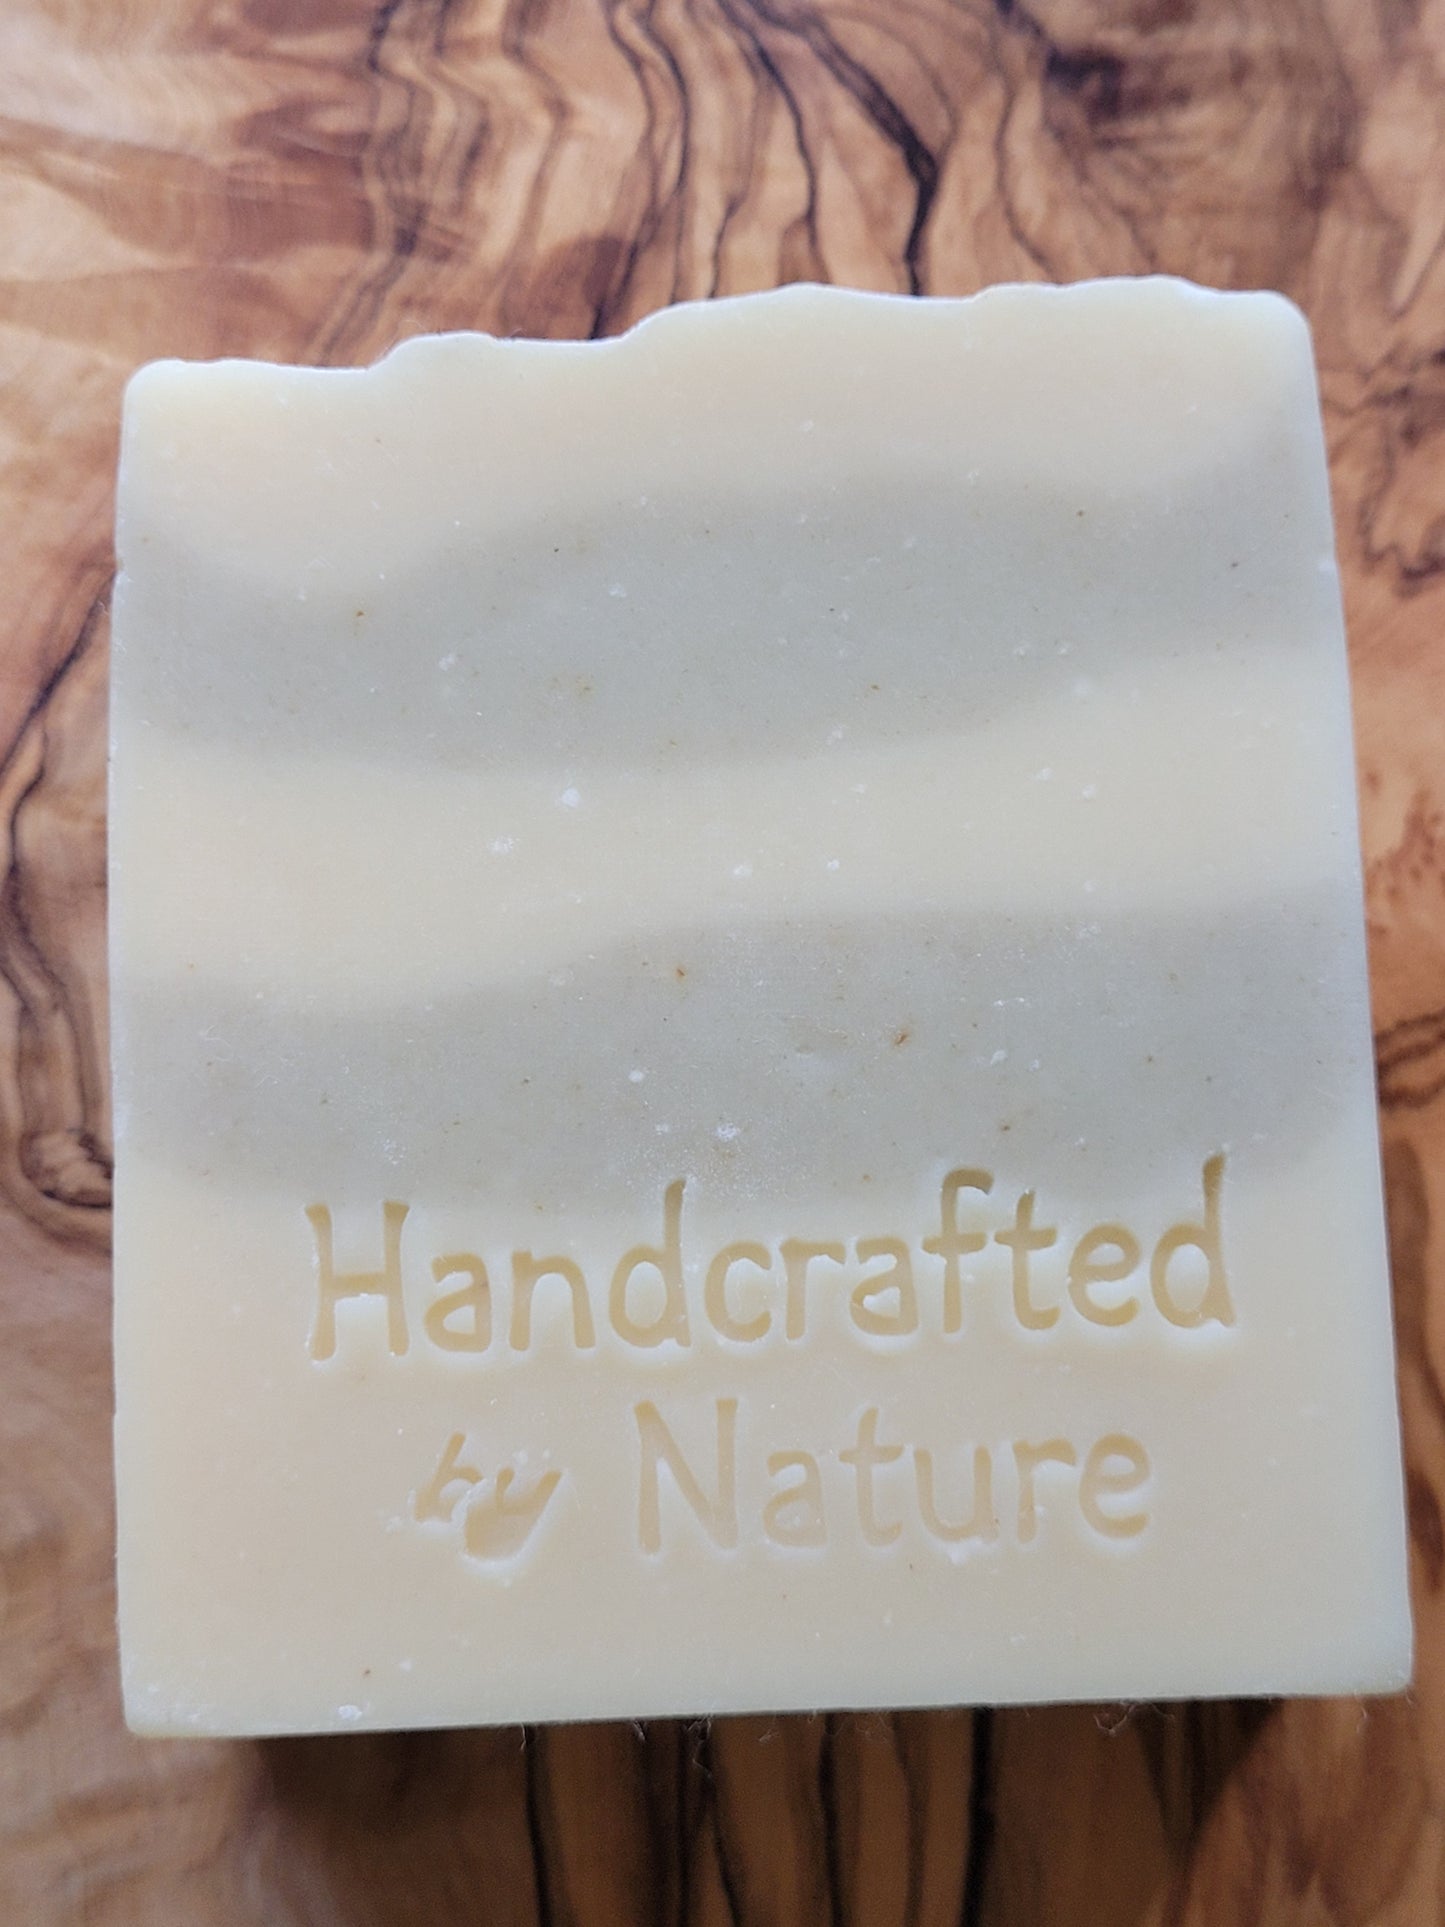 Coconut Lemongrass Natural Palm Oil-Free Bar Soap